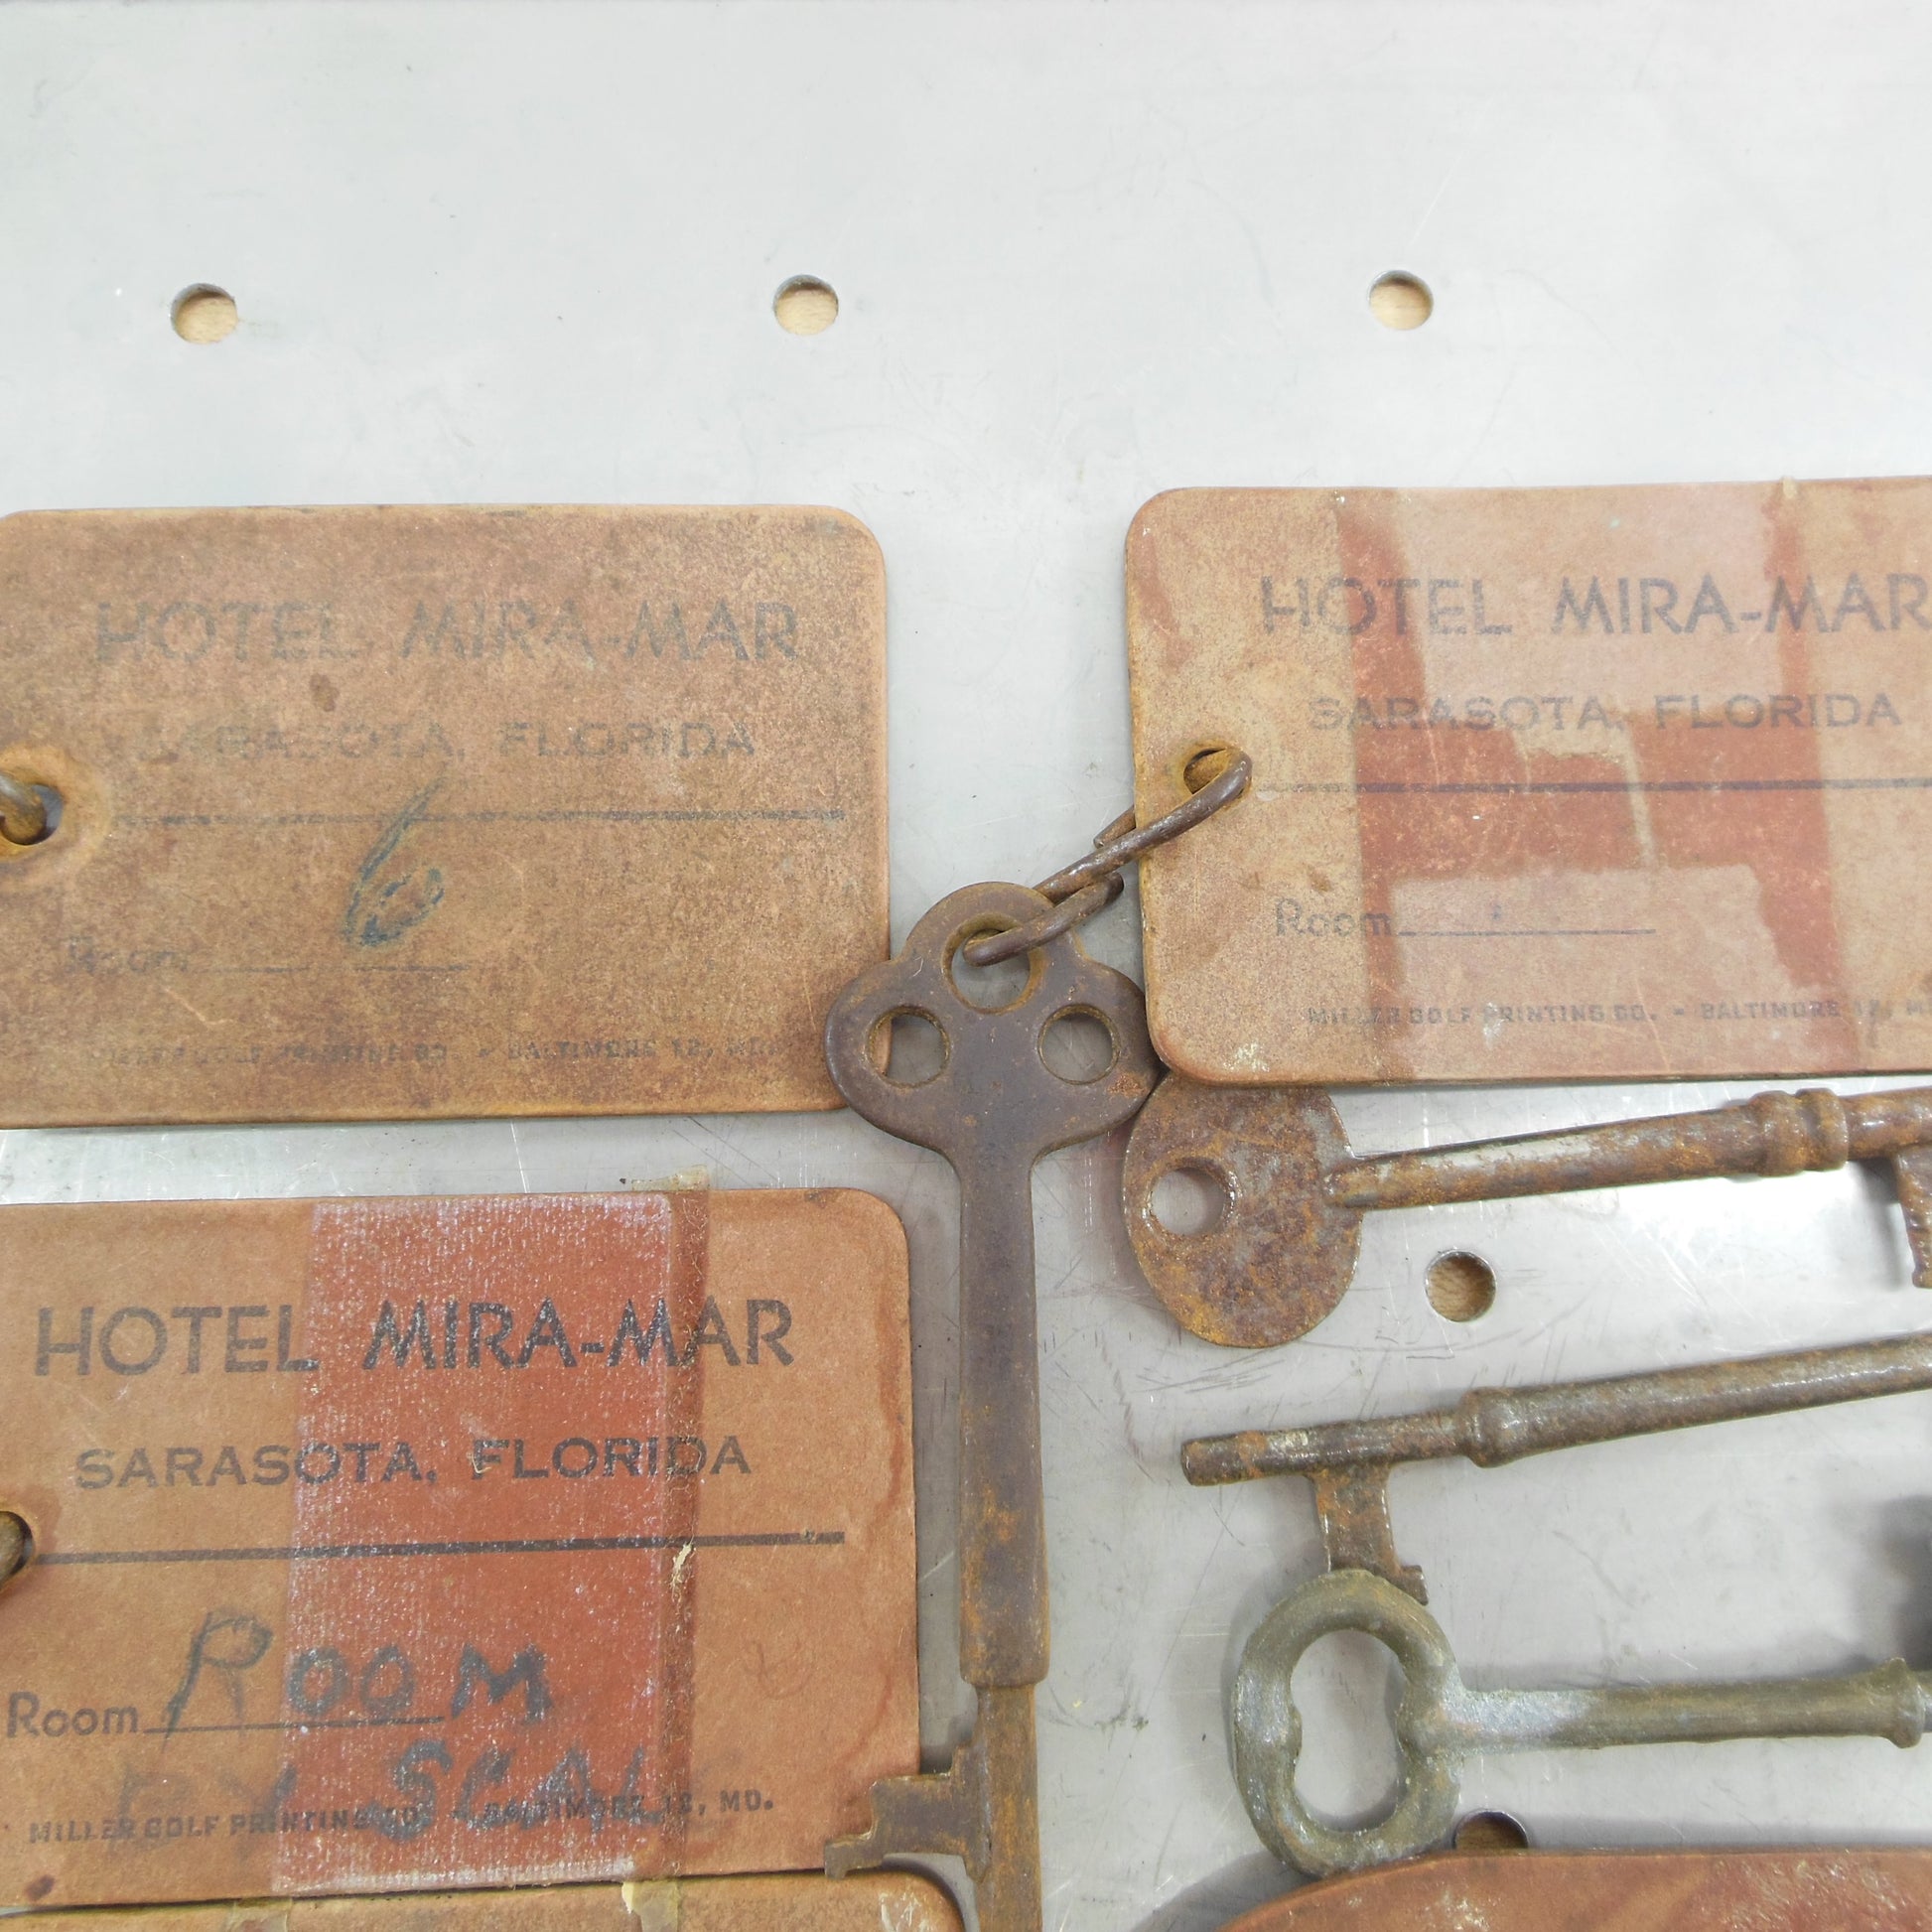 Mira-Mar Hotel Sarasota Florida Skeleton Room Keys & Fob - 5 Lot Red Rectangular Used